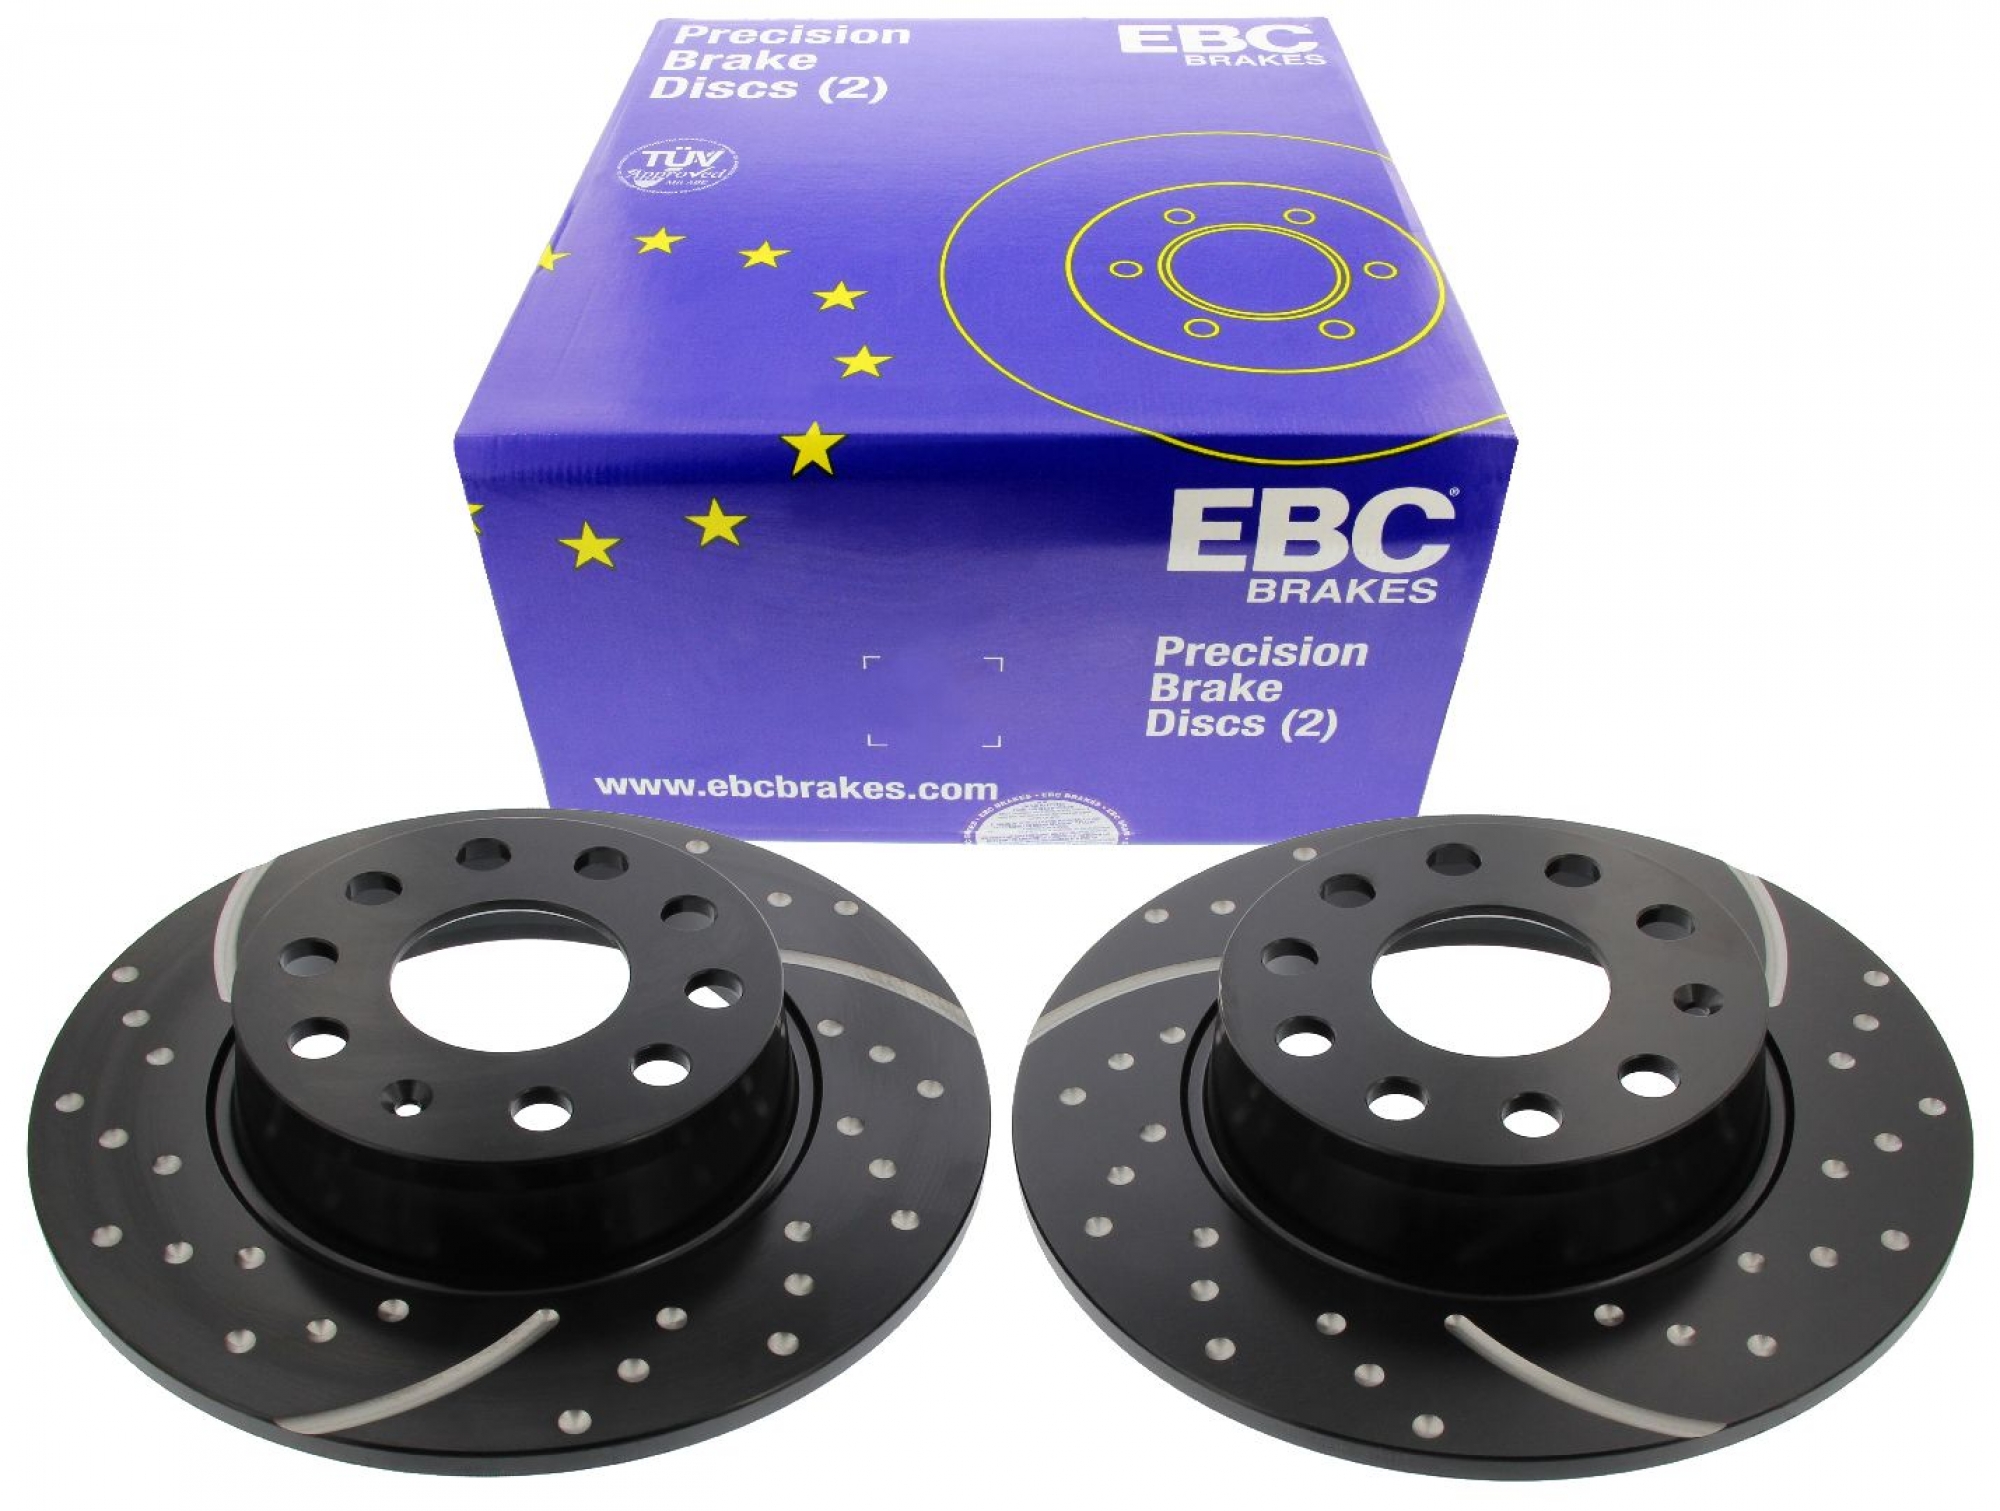 EBC-Bremsscheiben, Turbo Groove Disc Black (2-teilig), HA, Audi, Seat, Skoda, VW